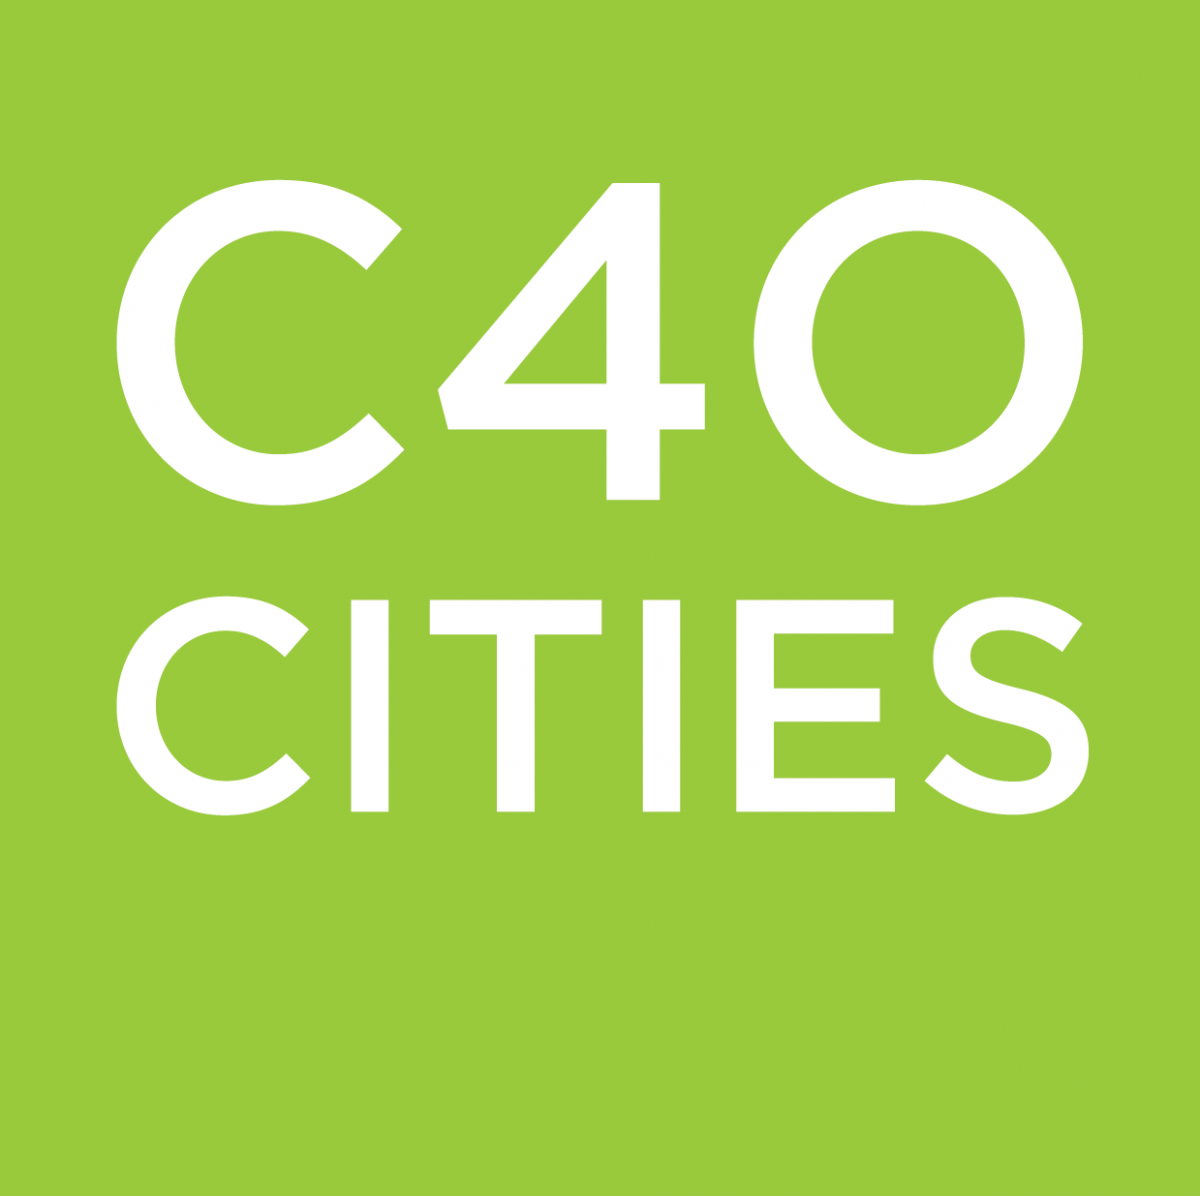 C40_Clean_Logo_CMYK_green.png